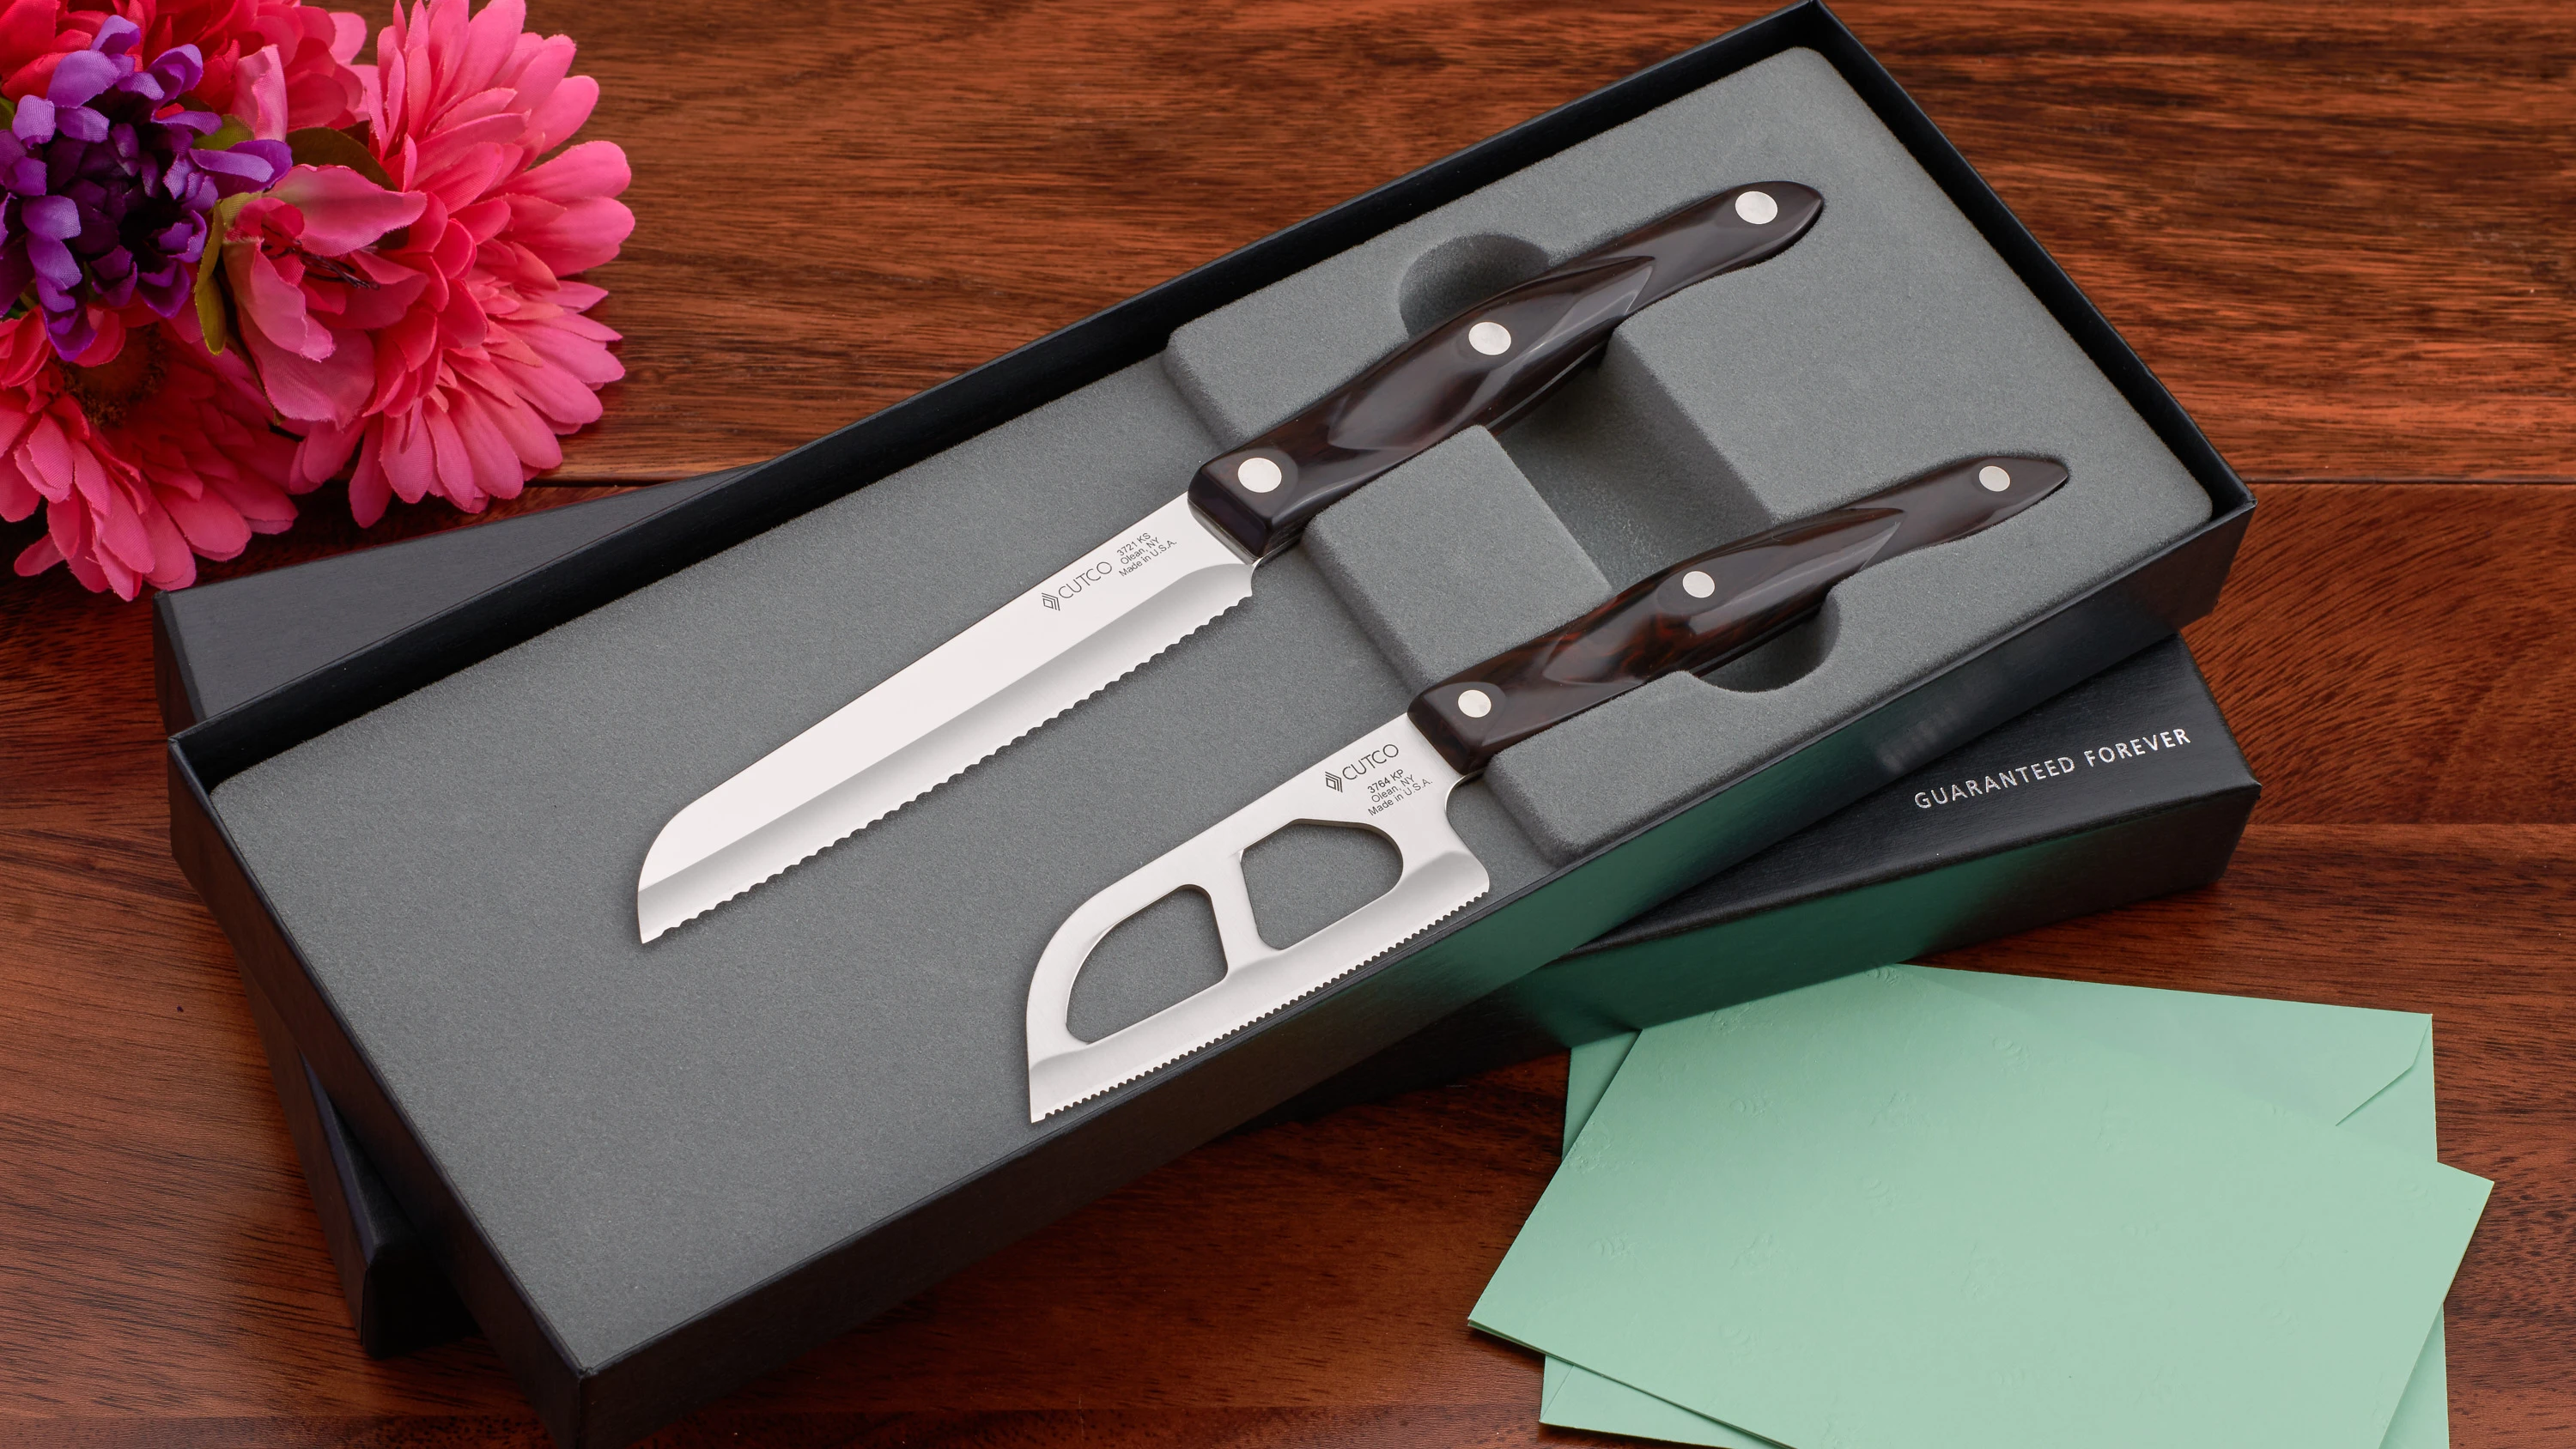 Cutco Serrated Kitchen Knife Sets